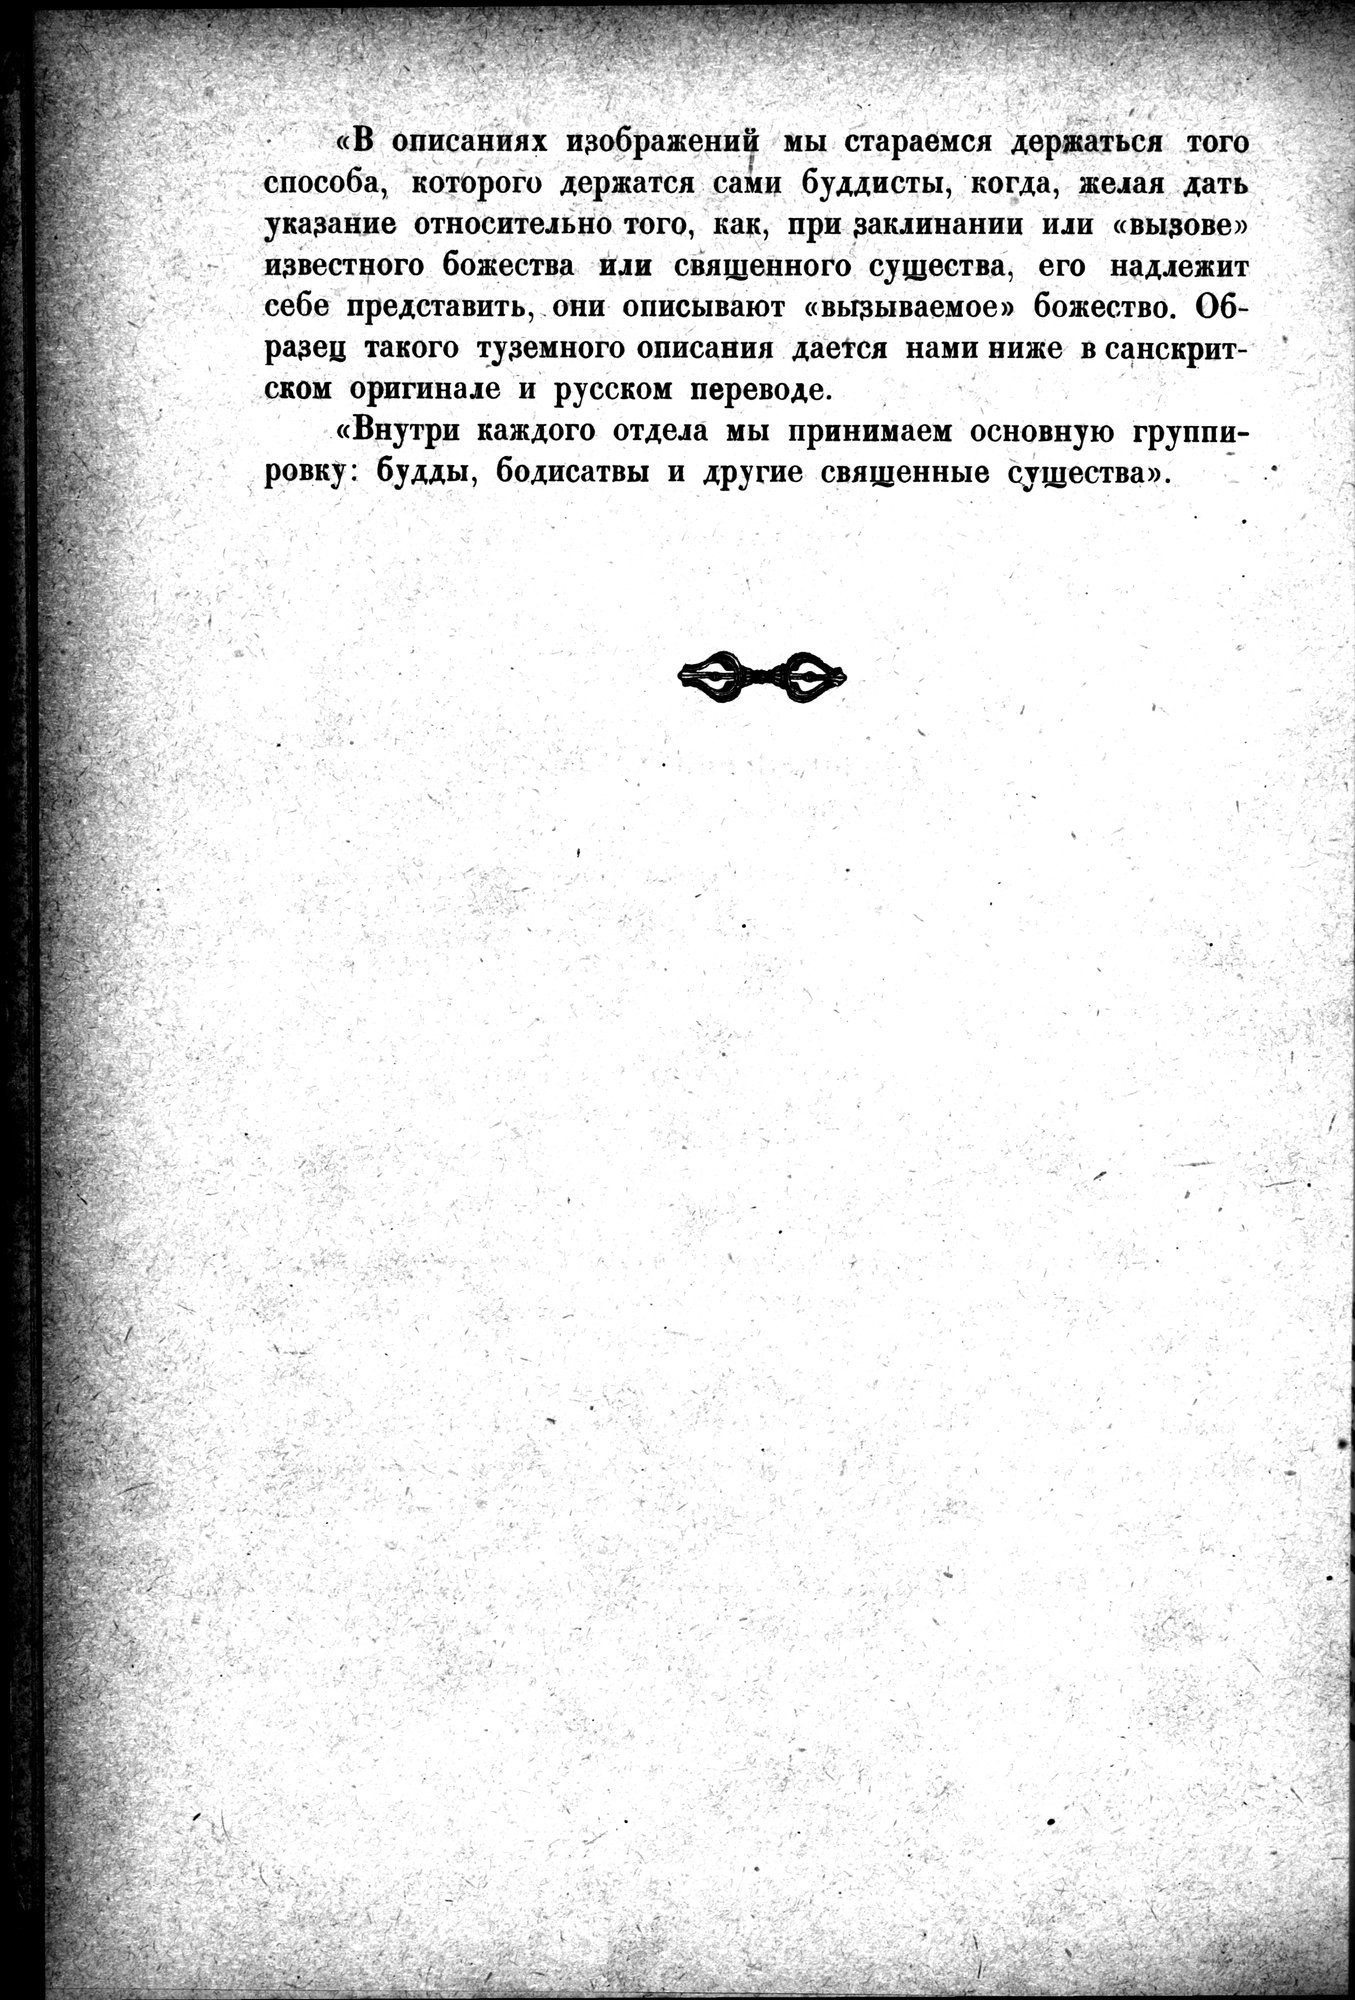 Mongoliya i Amdo i mertby gorod Khara-Khoto : vol.1 / Page 654 (Grayscale High Resolution Image)